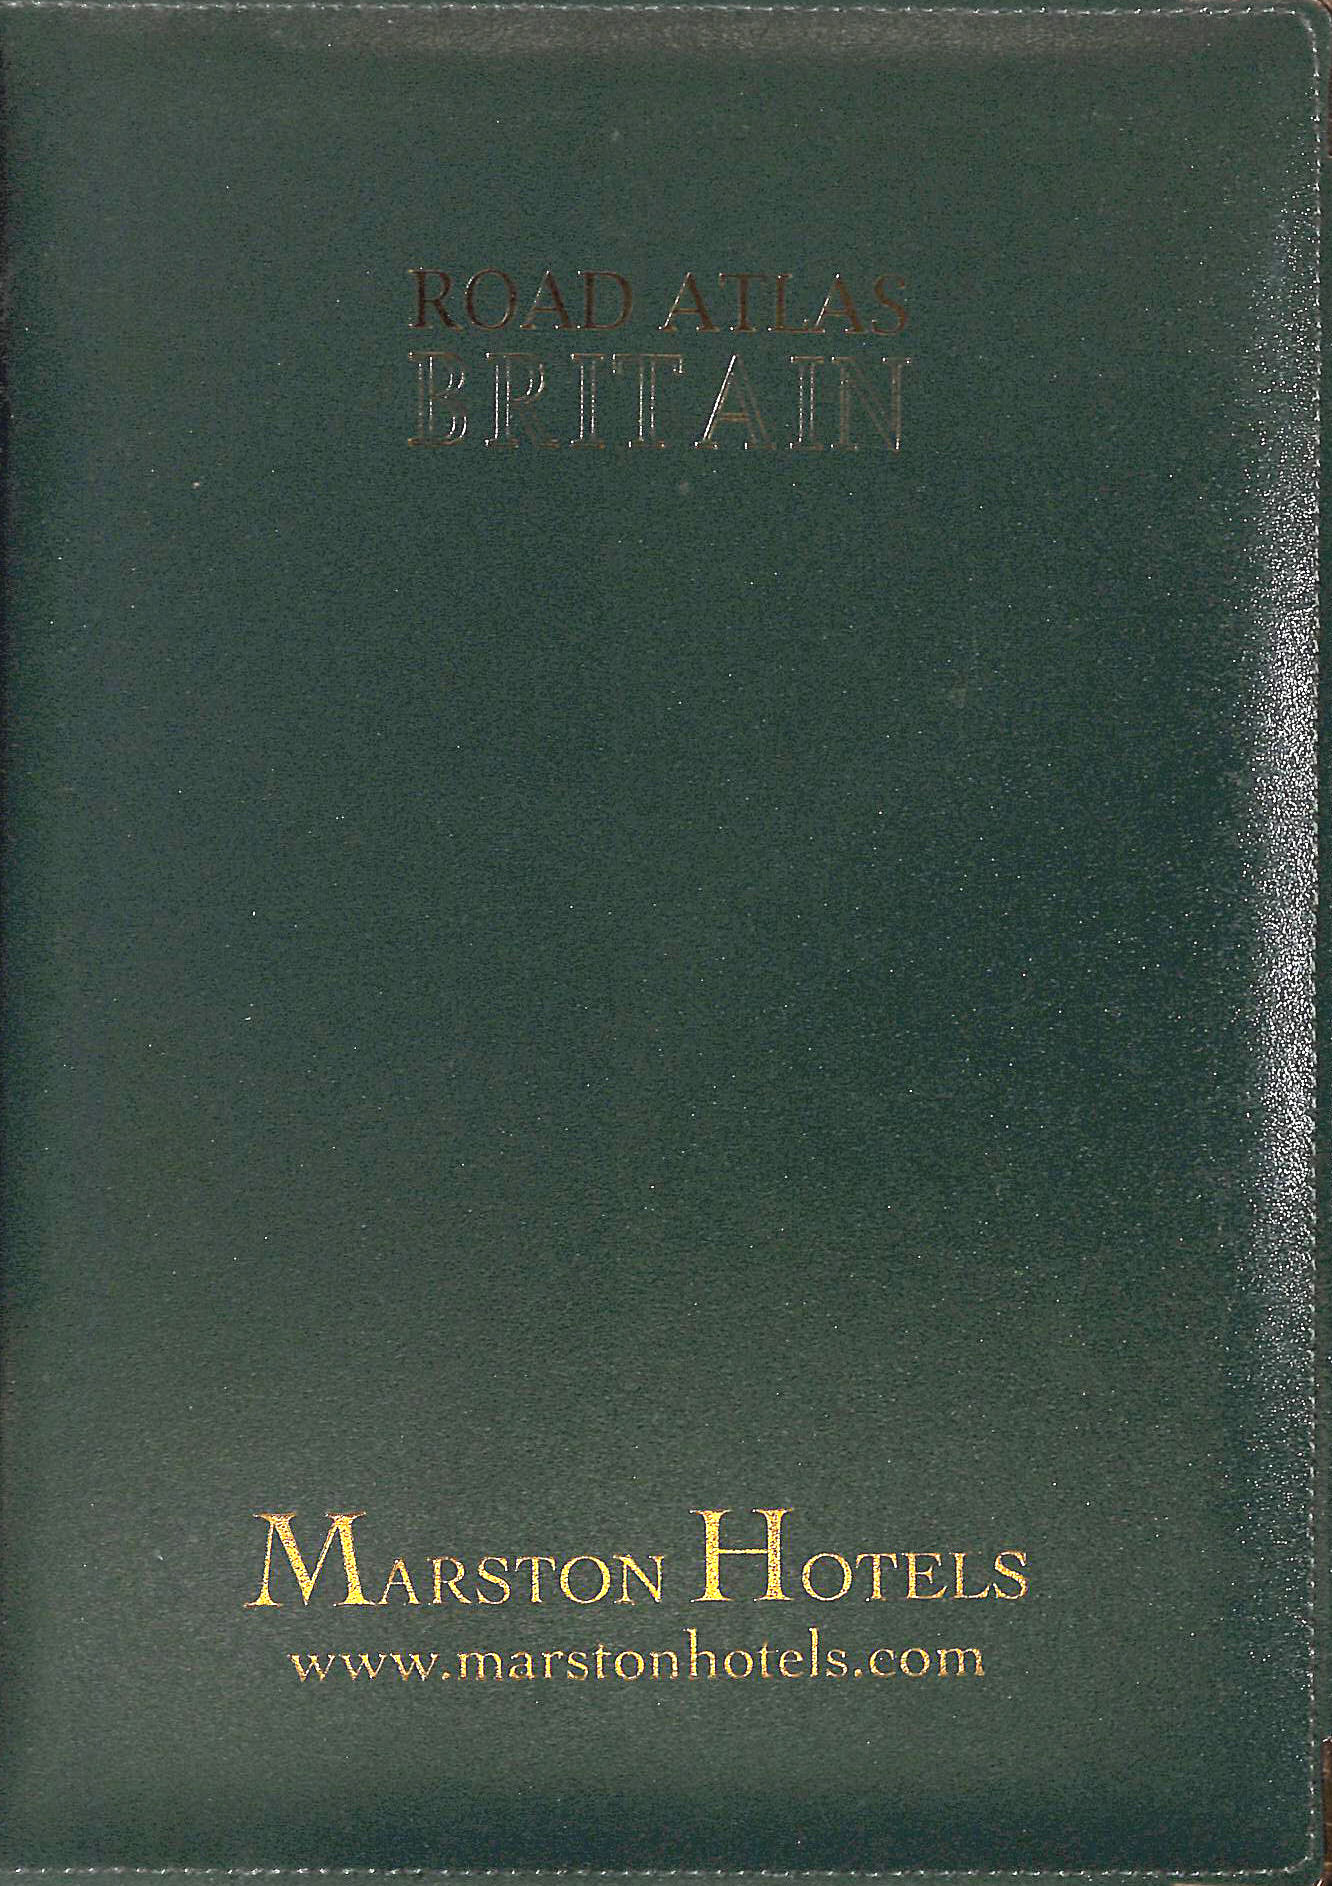 AA - AA Road Atlas of Great Britain (Marstons Hotels)